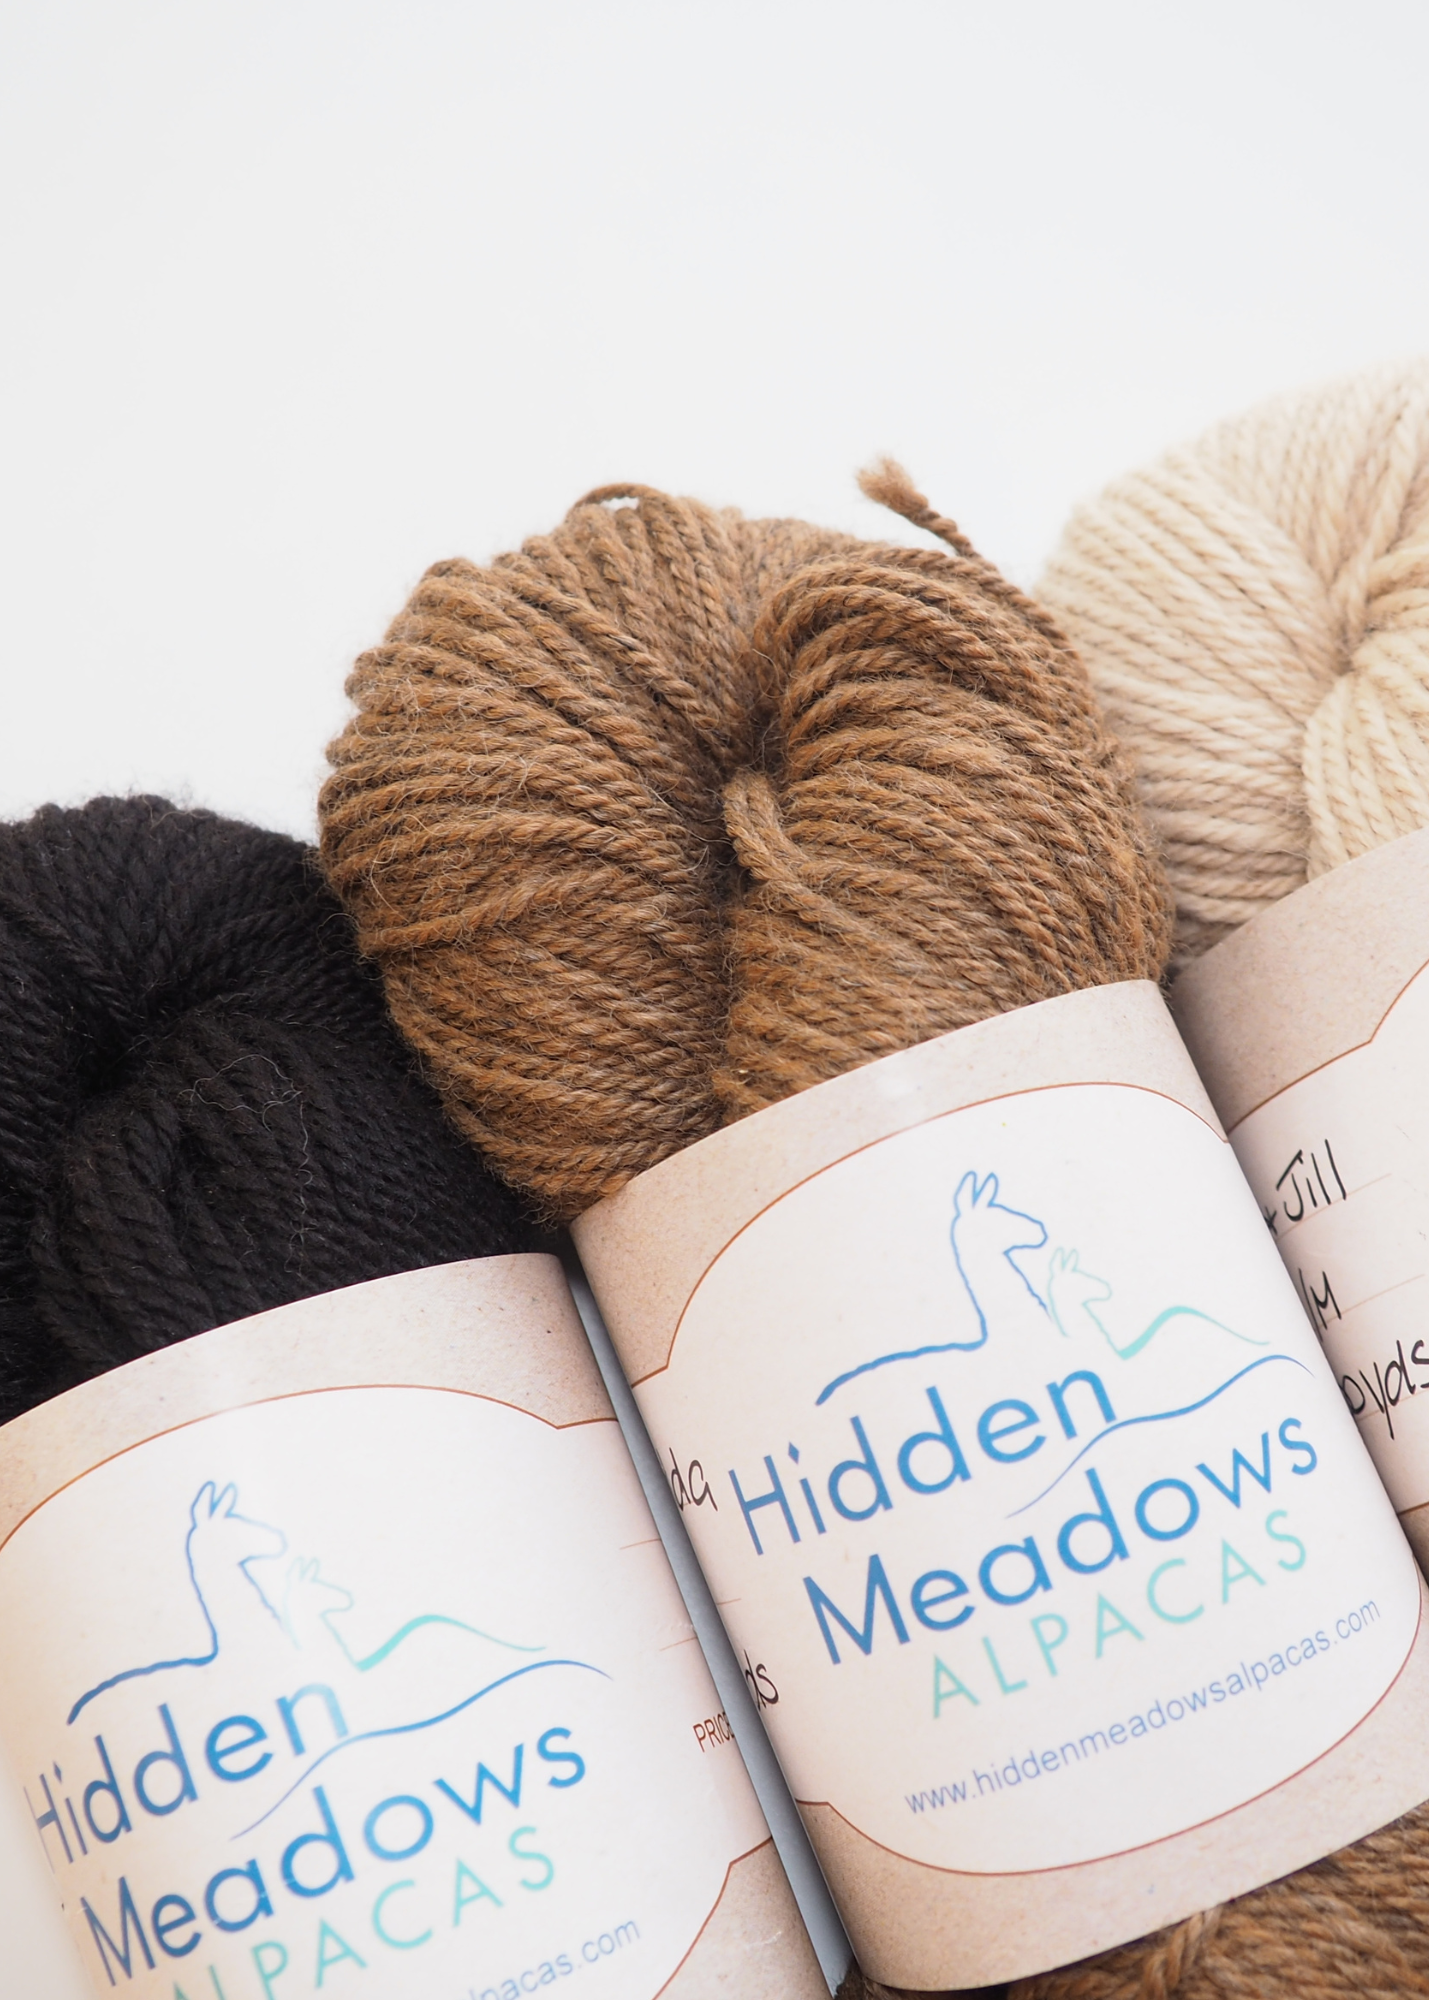 Hidden Meadows Alpaca Yarn